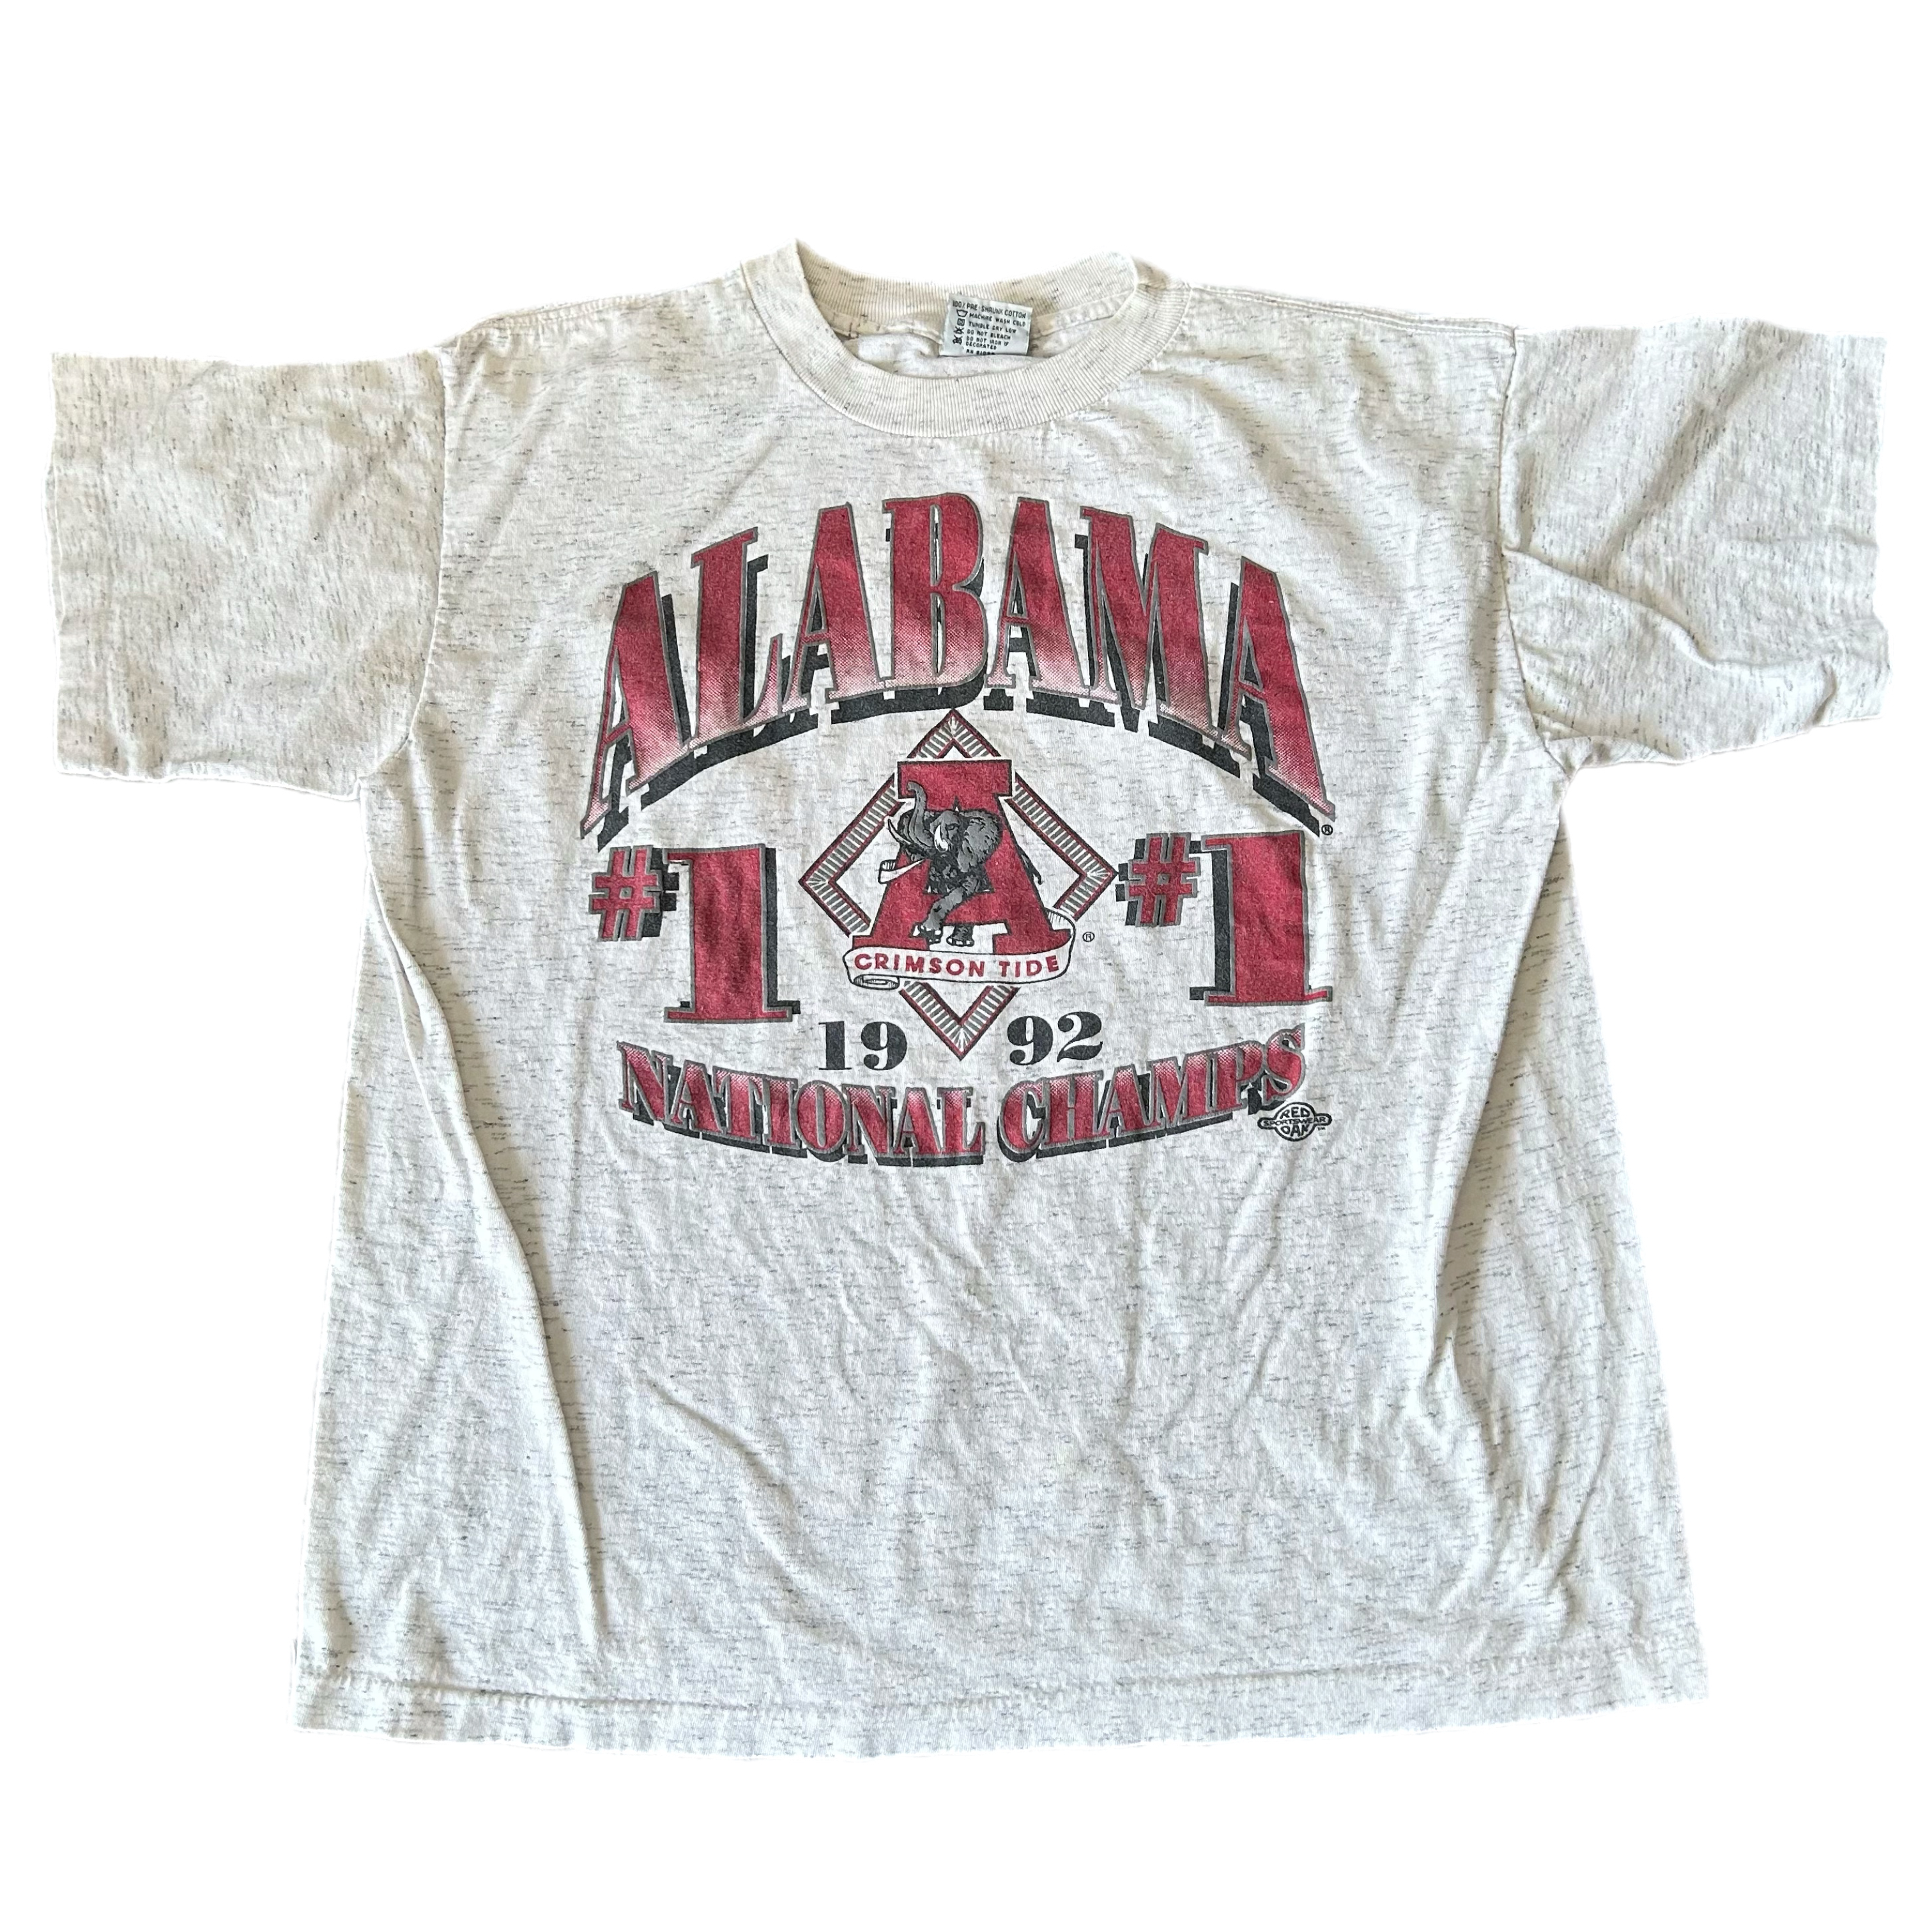 Vintage Alabama 1992National Champs Tshirt